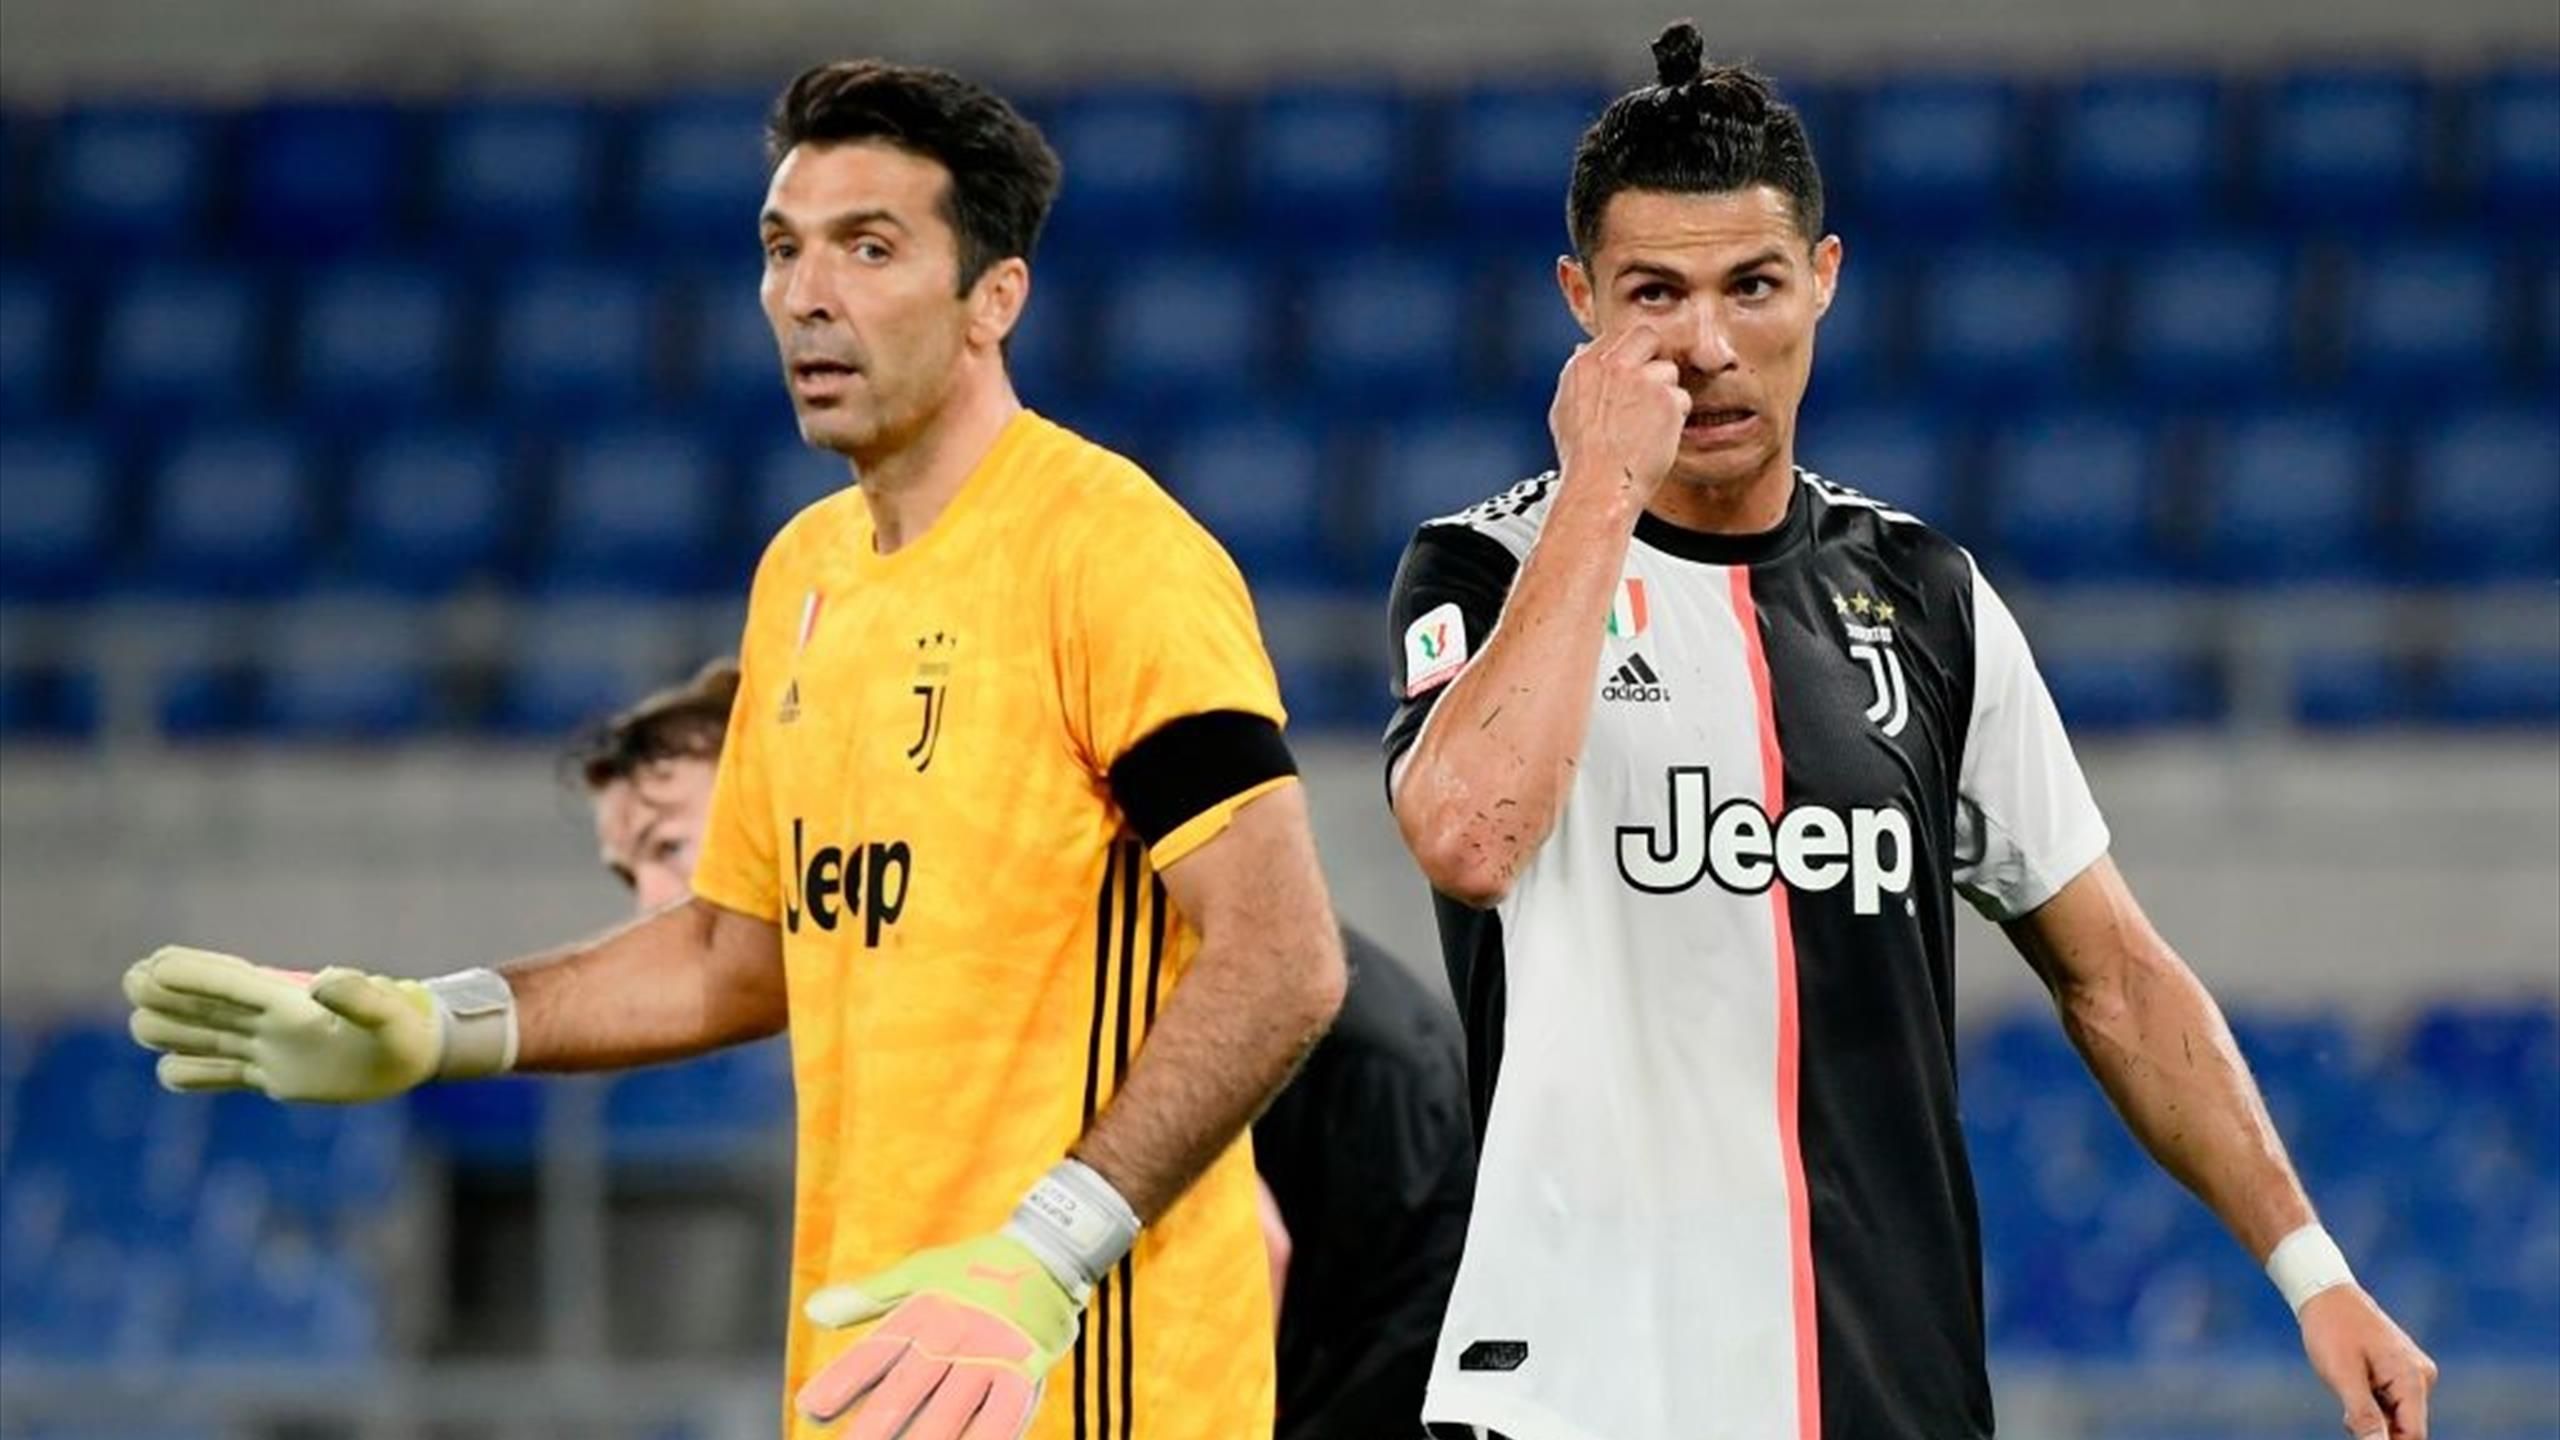 Juventus: Buffon stays - Eurosport